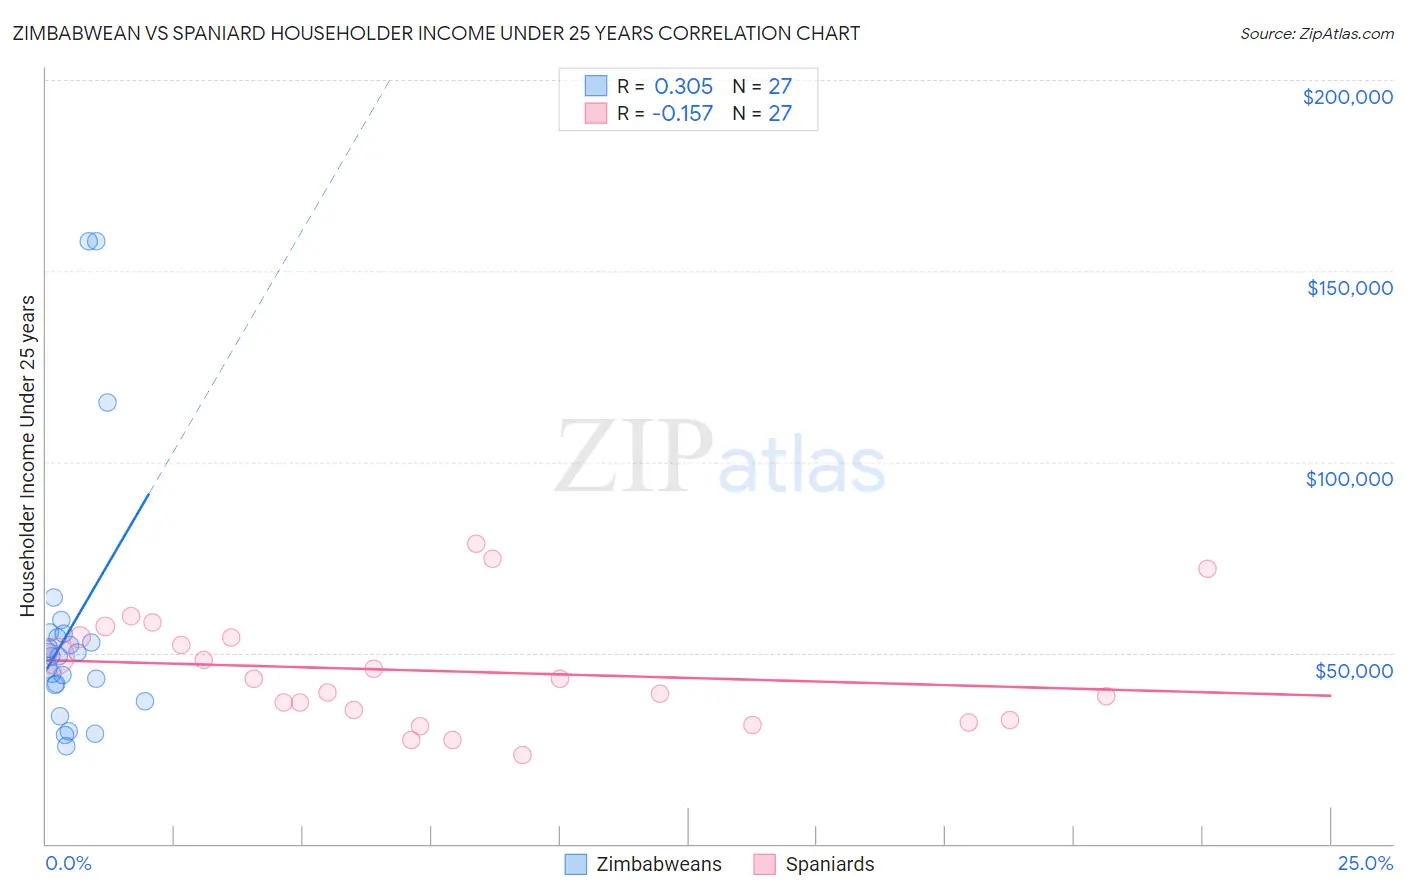 Zimbabwean vs Spaniard Householder Income Under 25 years